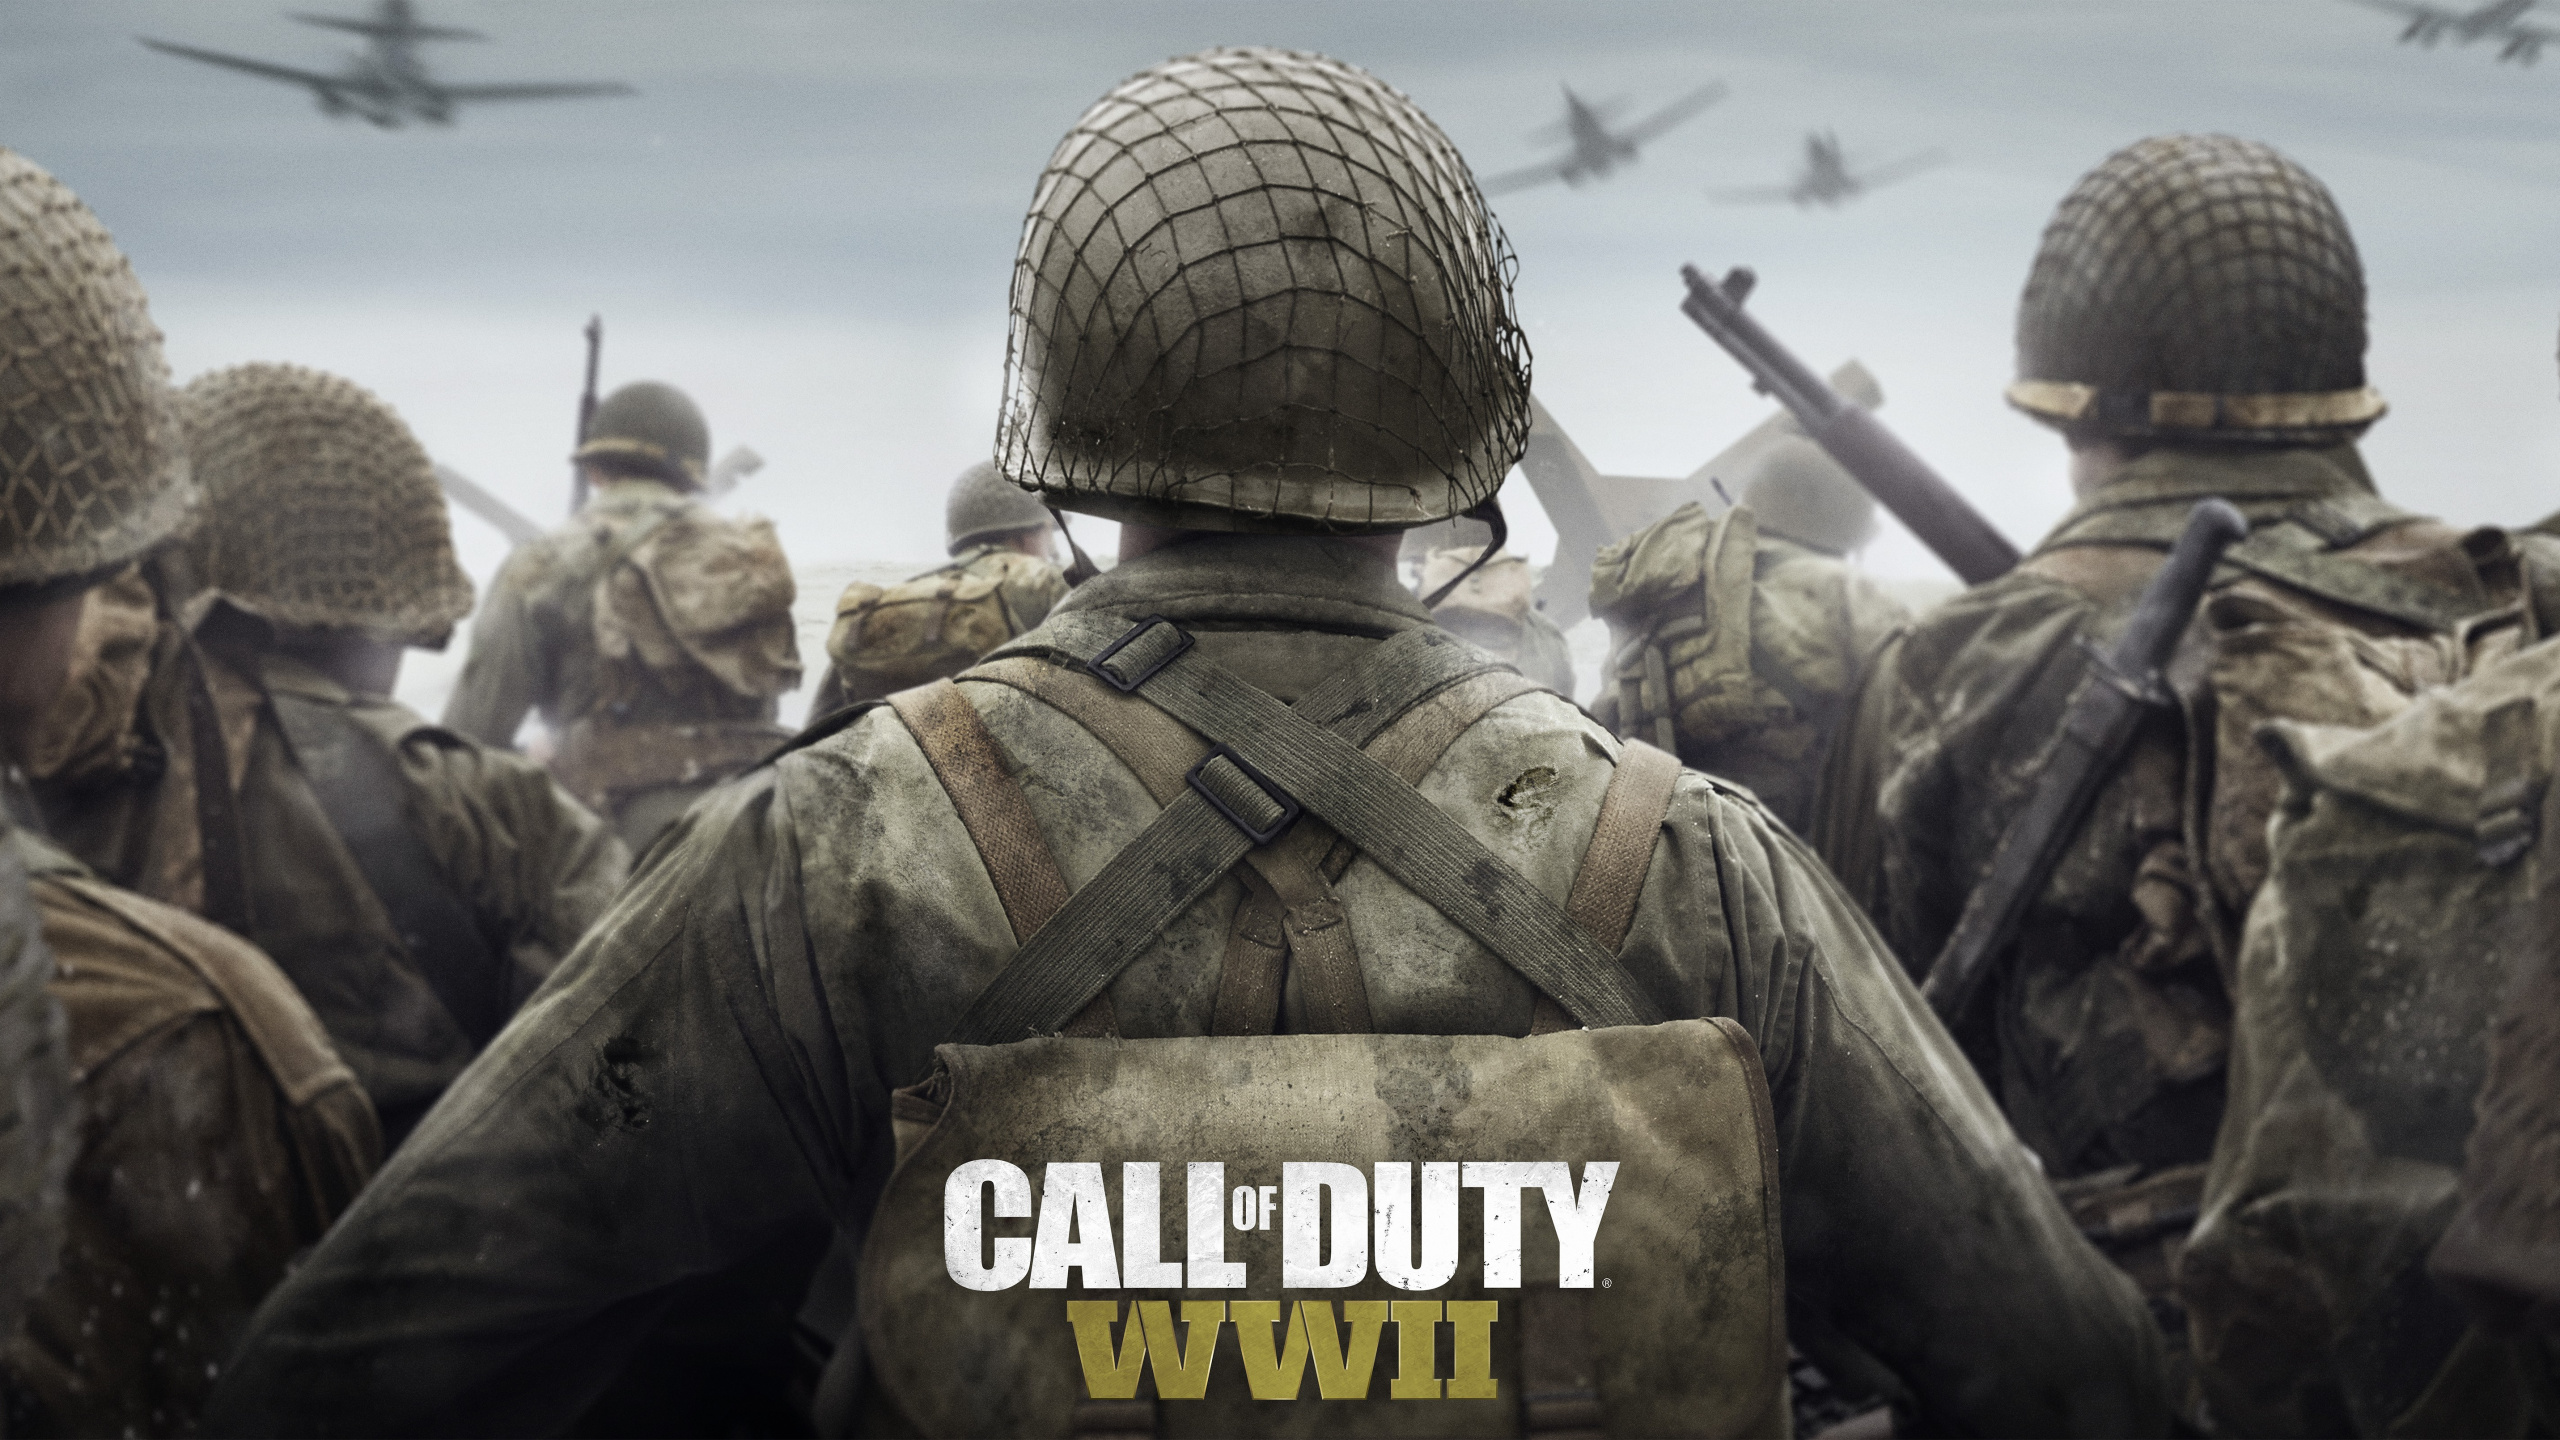 Call of Duty Ww2, Call of Duty de la Seconde GUERRE Mondiale, Activision, Sledgehammer Games, Soldat. Wallpaper in 2560x1440 Resolution